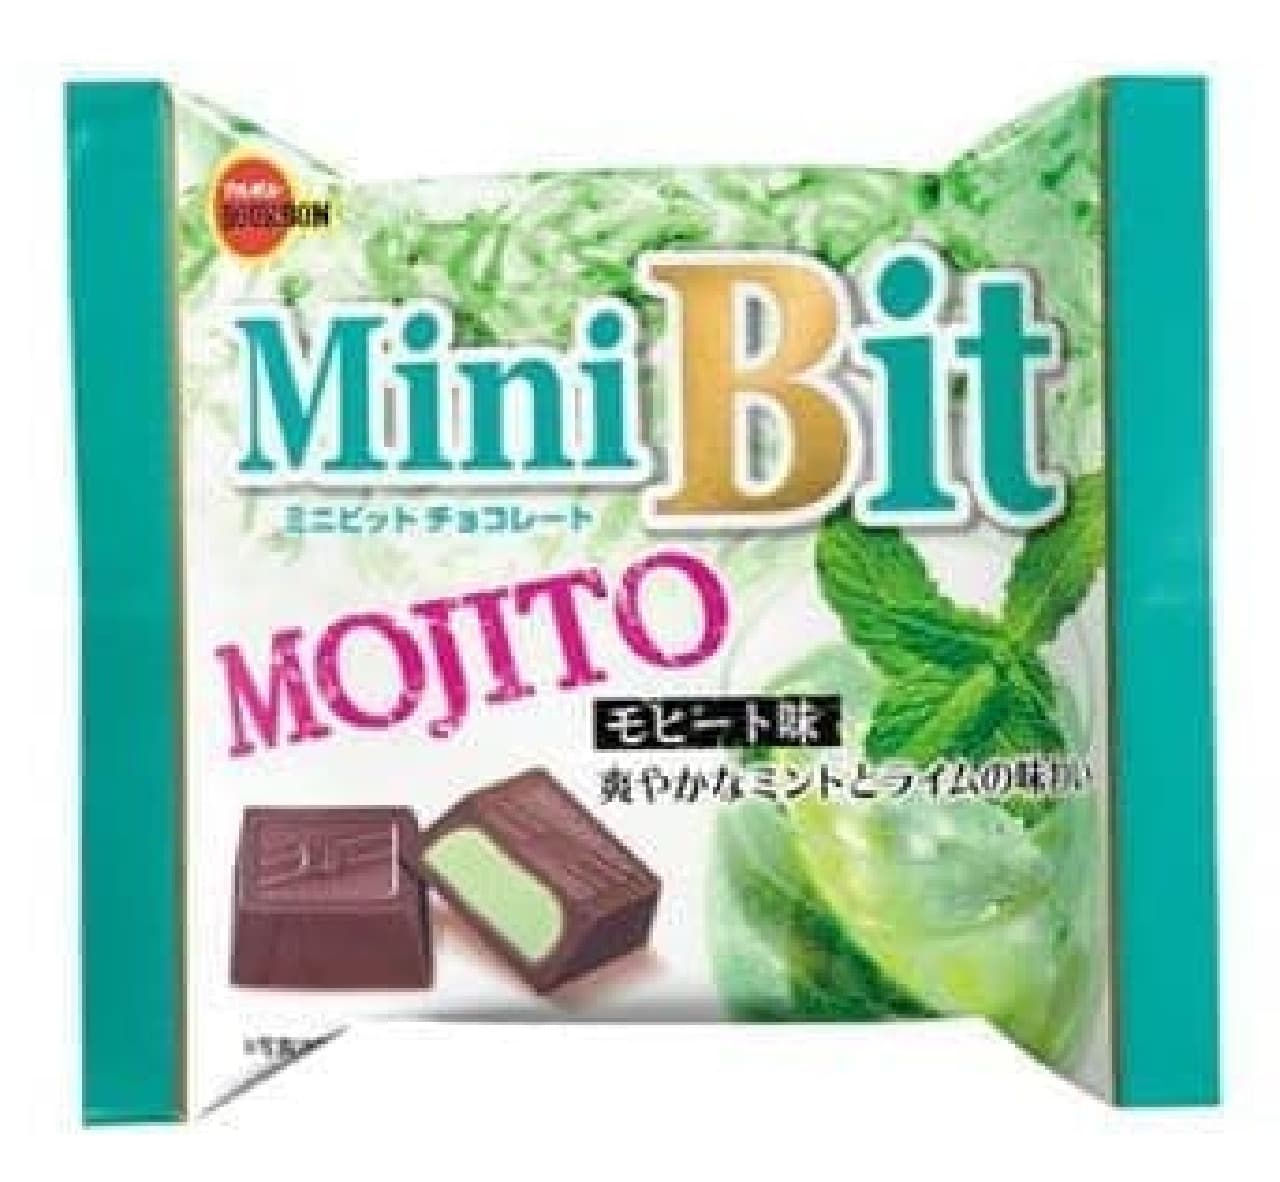 One mojito-flavored chocolate!